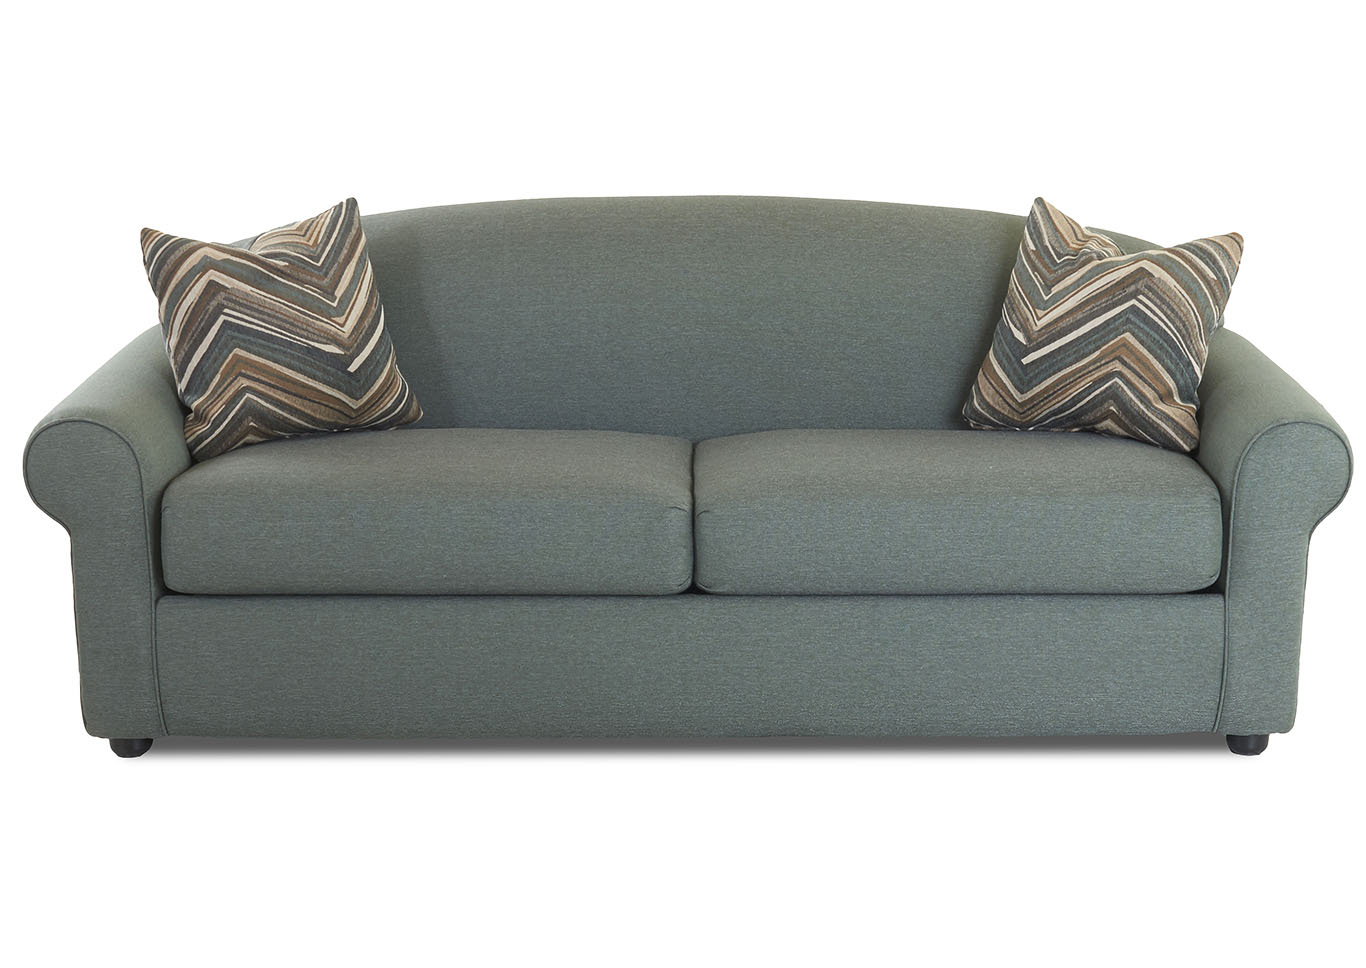 Possibilities Turquoise Sleeper Fabric Sofa,Klaussner Home Furnishings